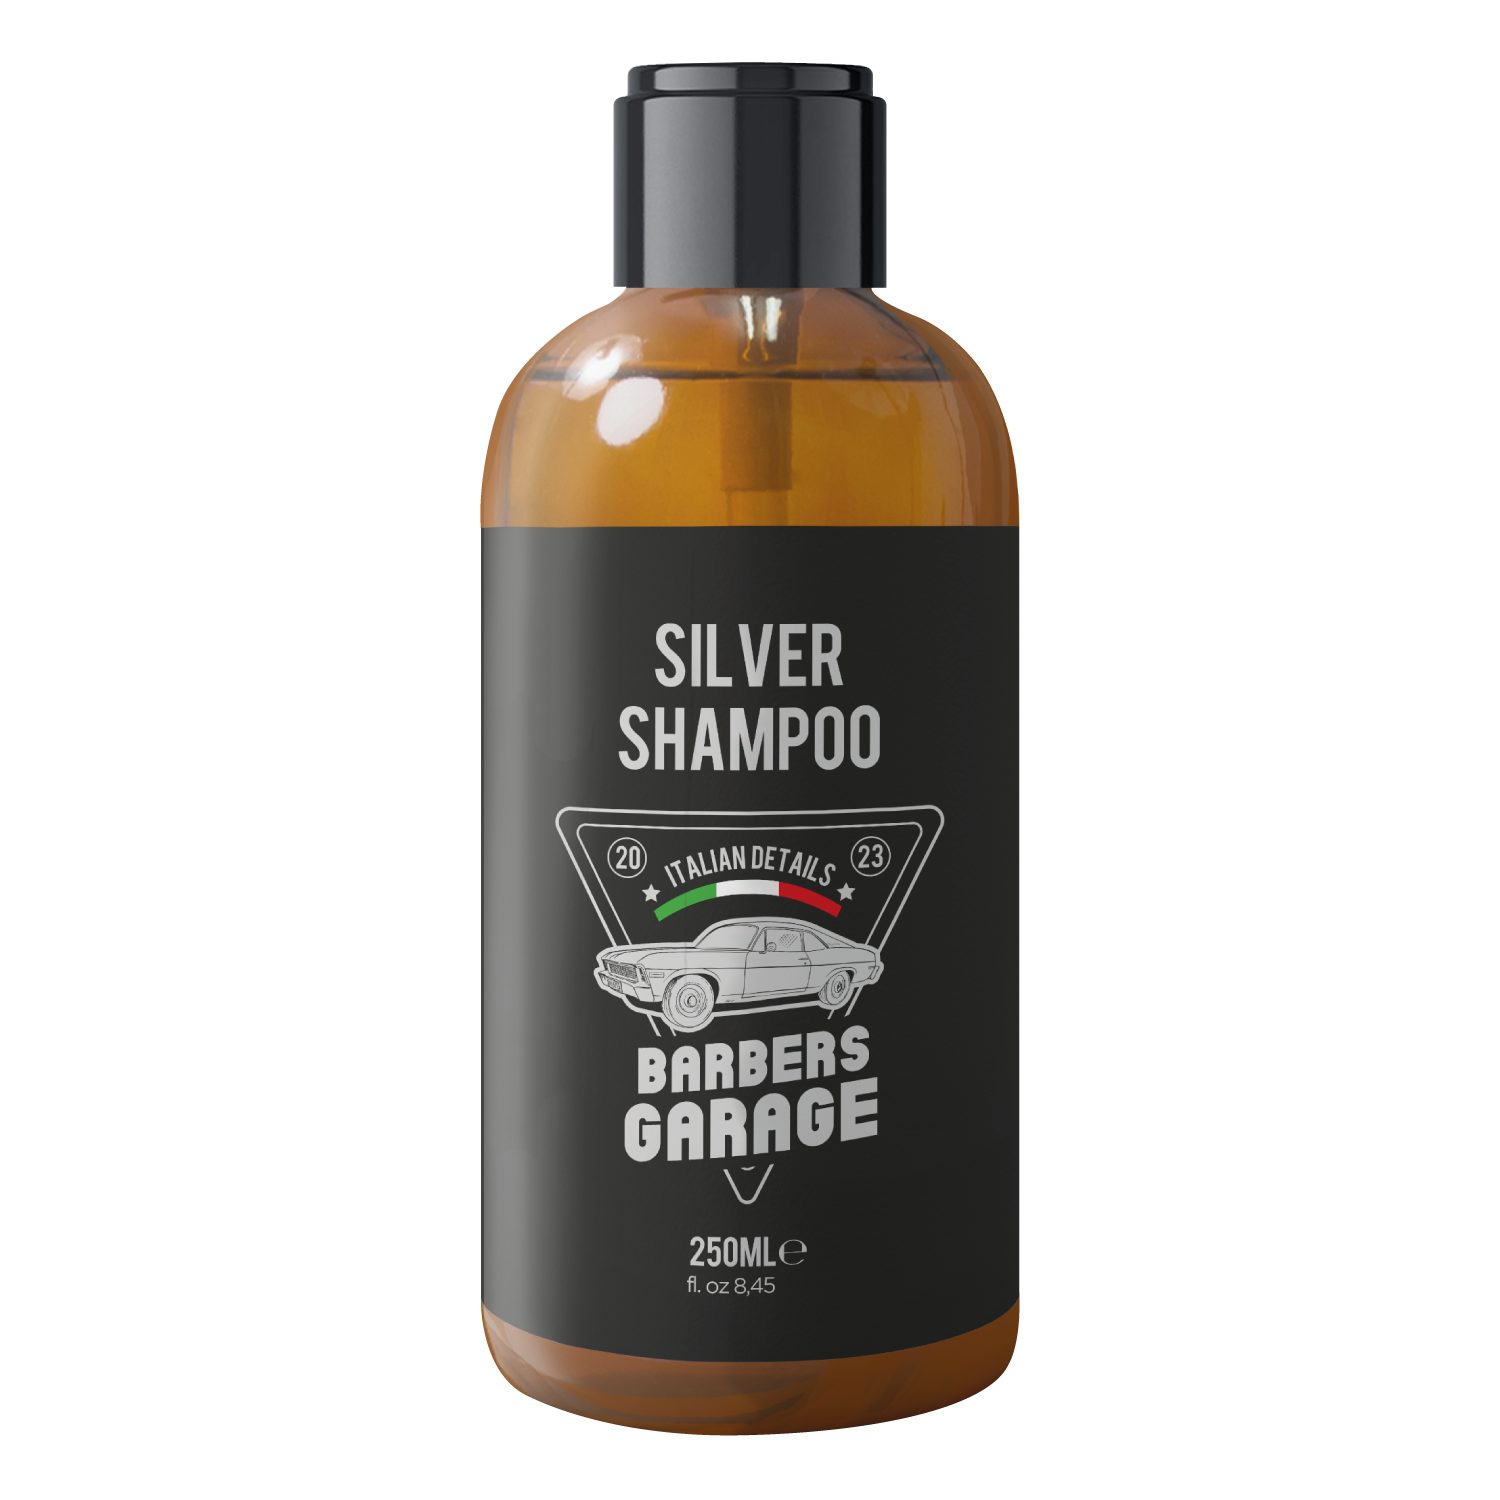 Veana Silbershampoo Barbers Garage exklusives Silber Shampoo (250ml)